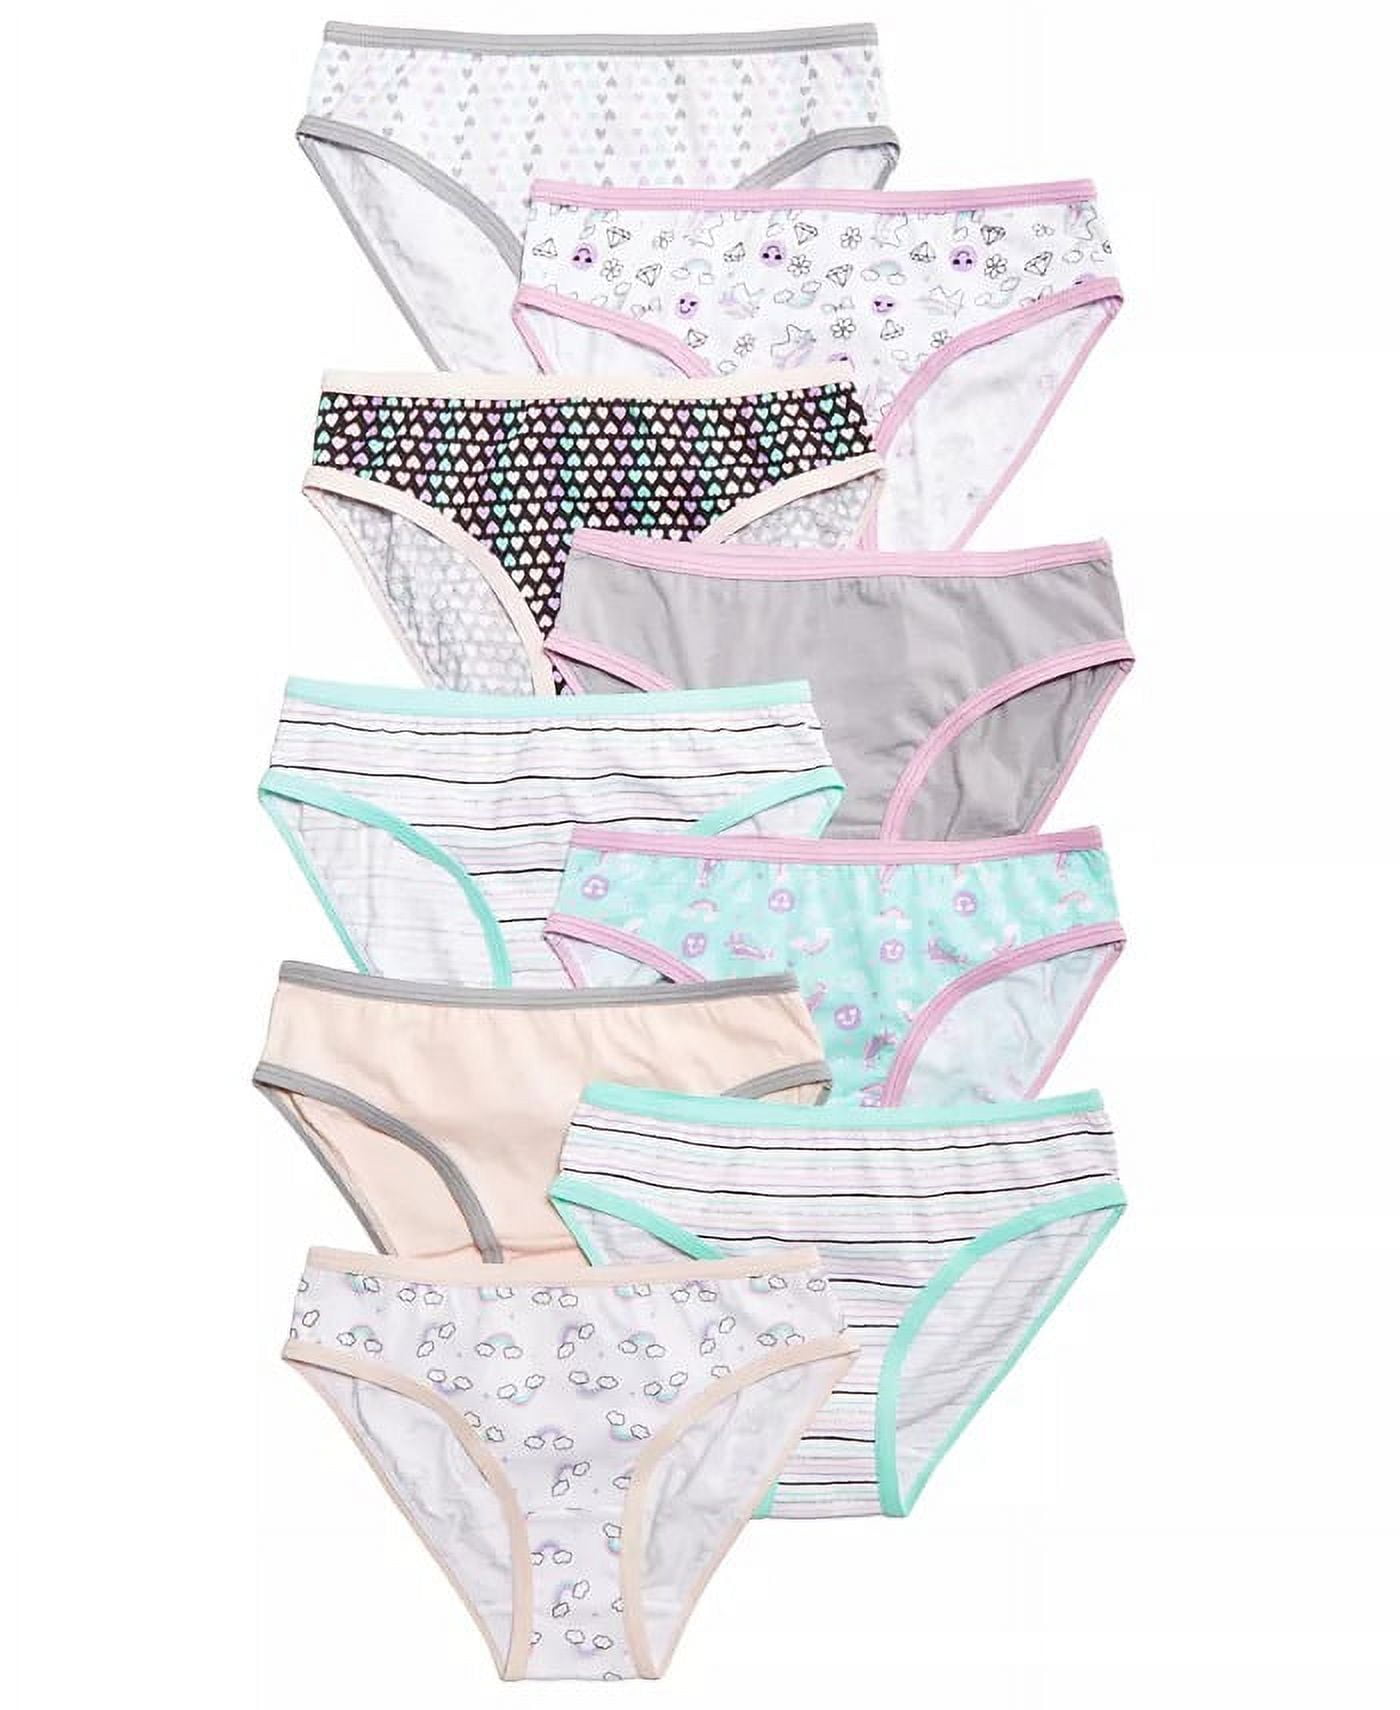 LOL Surprise Girls Panties Underwear 8-Pack Sizes 2T/3T, 4T, 4, 6